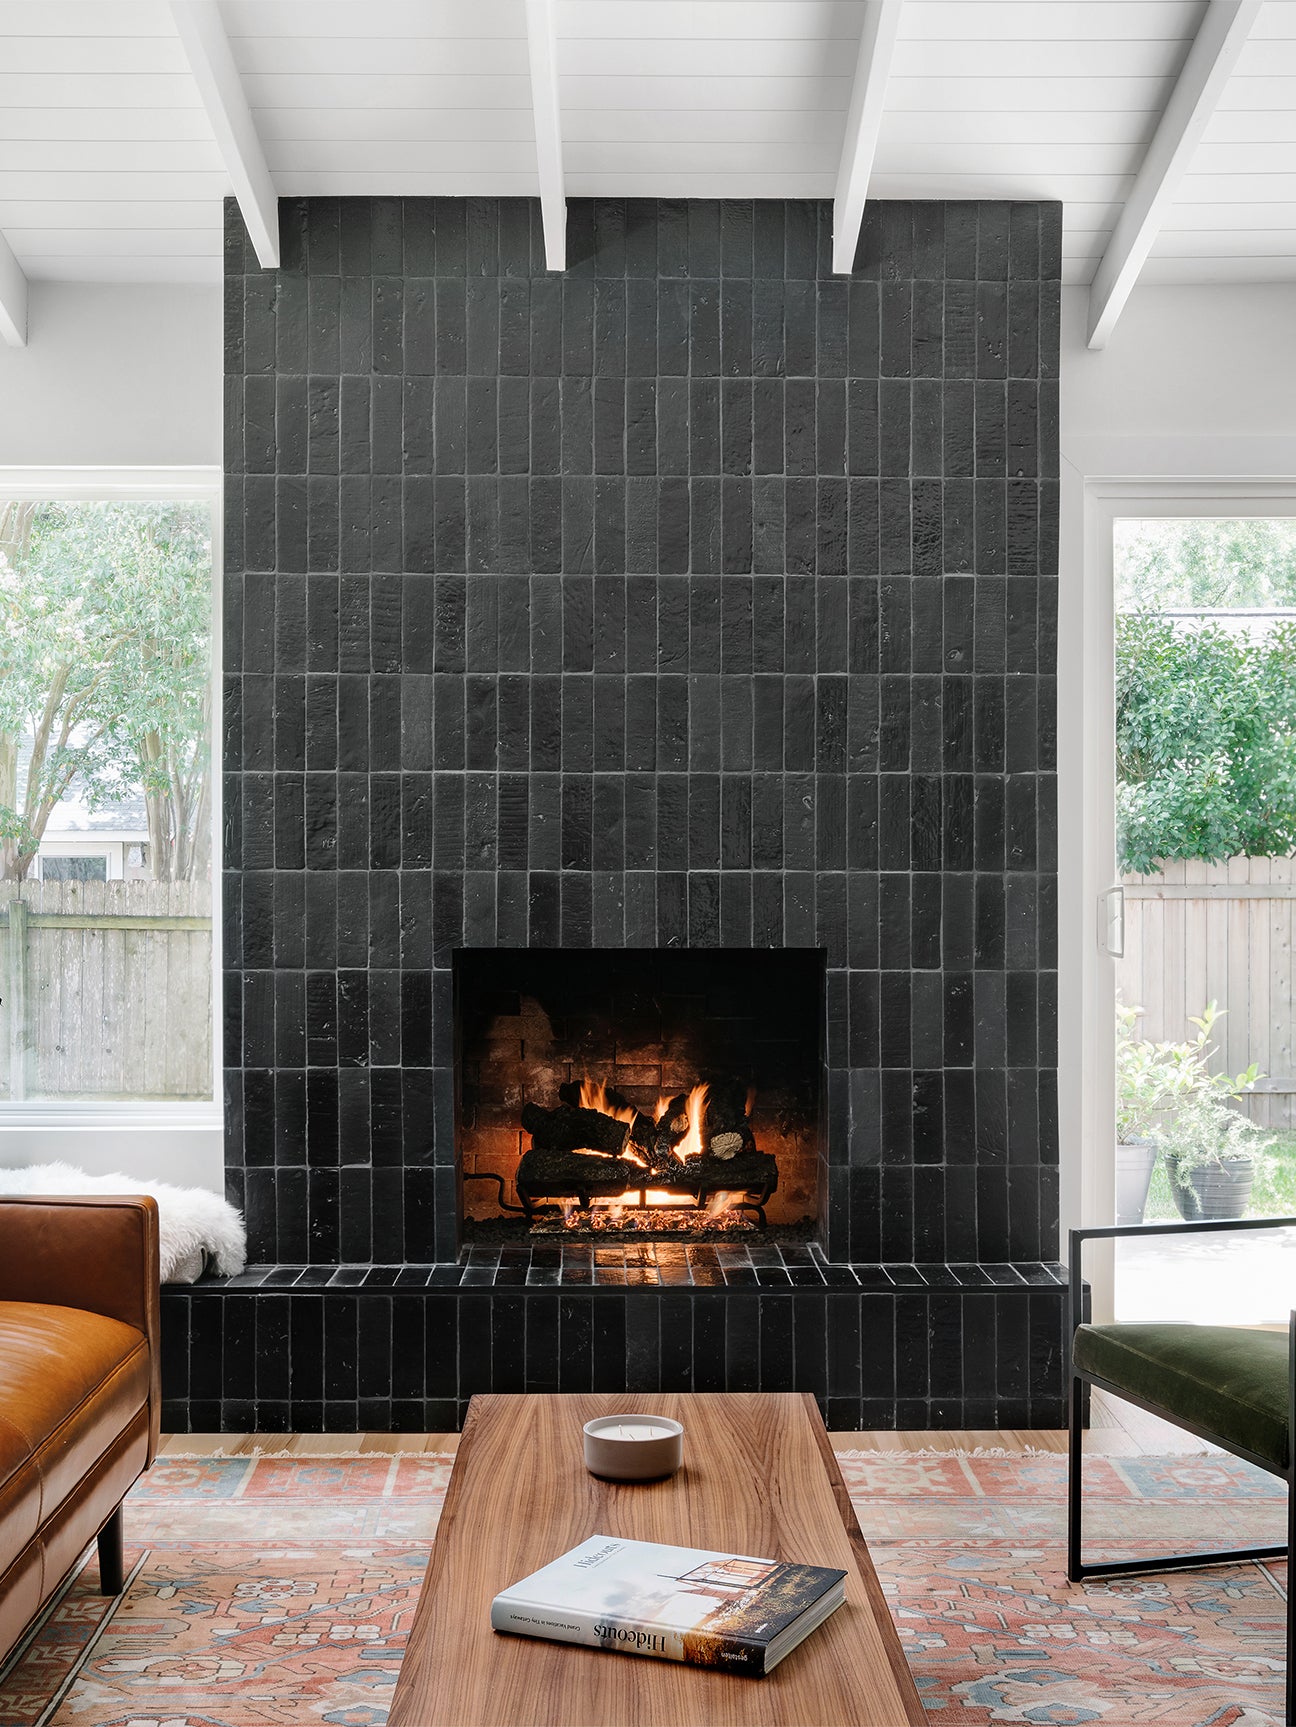 Beautiful fireplace design with black ceramic subway tile